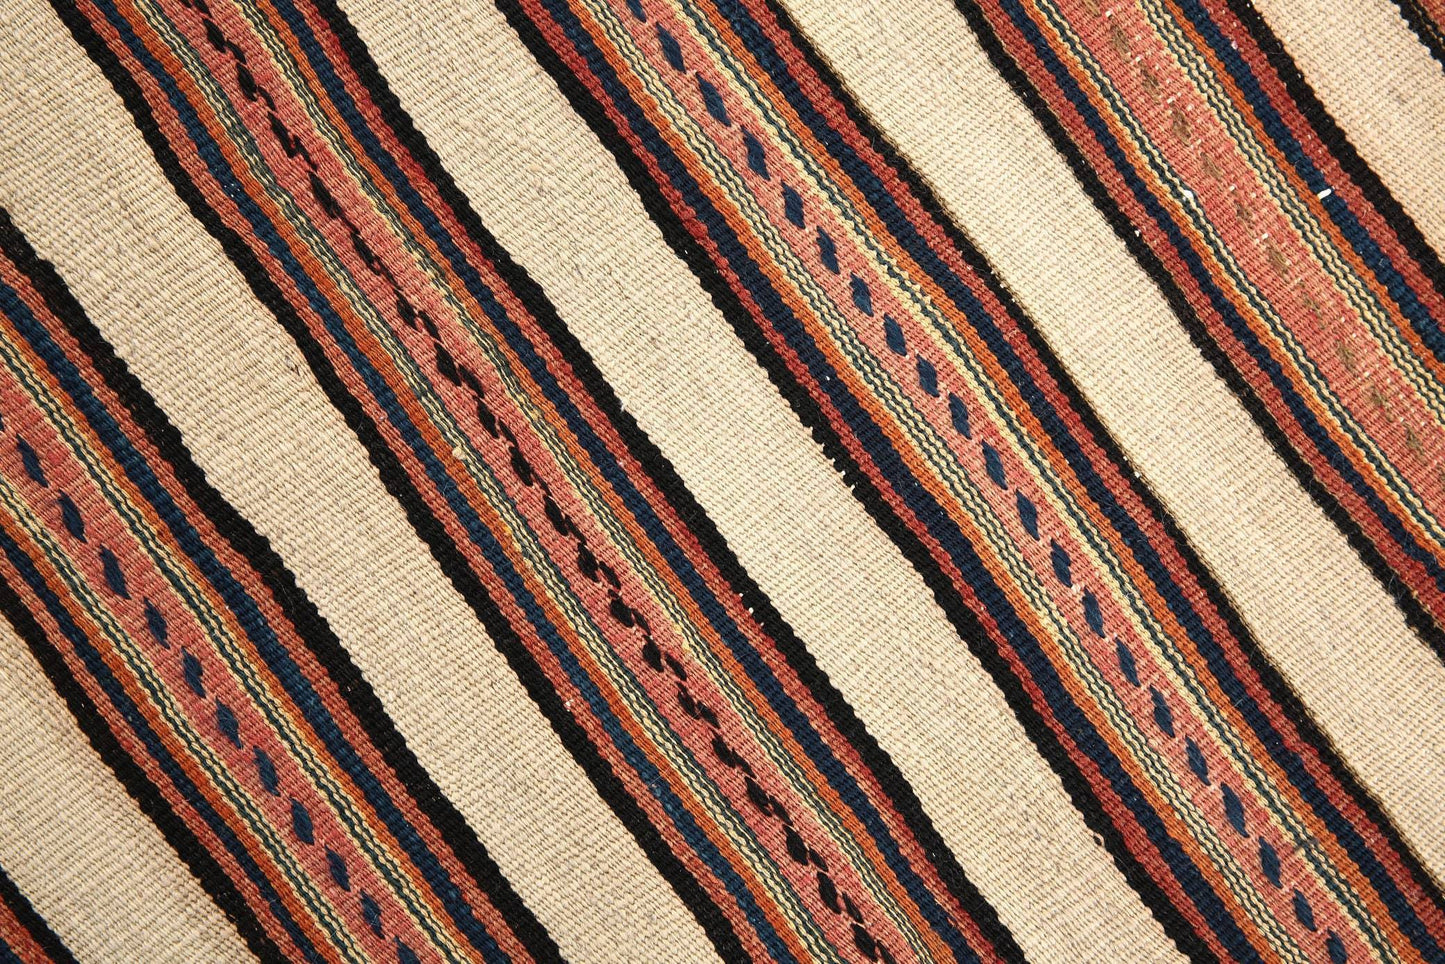 2' x 3' Tan-Ivory Turkish Kilim Old Rug  |  RugReform